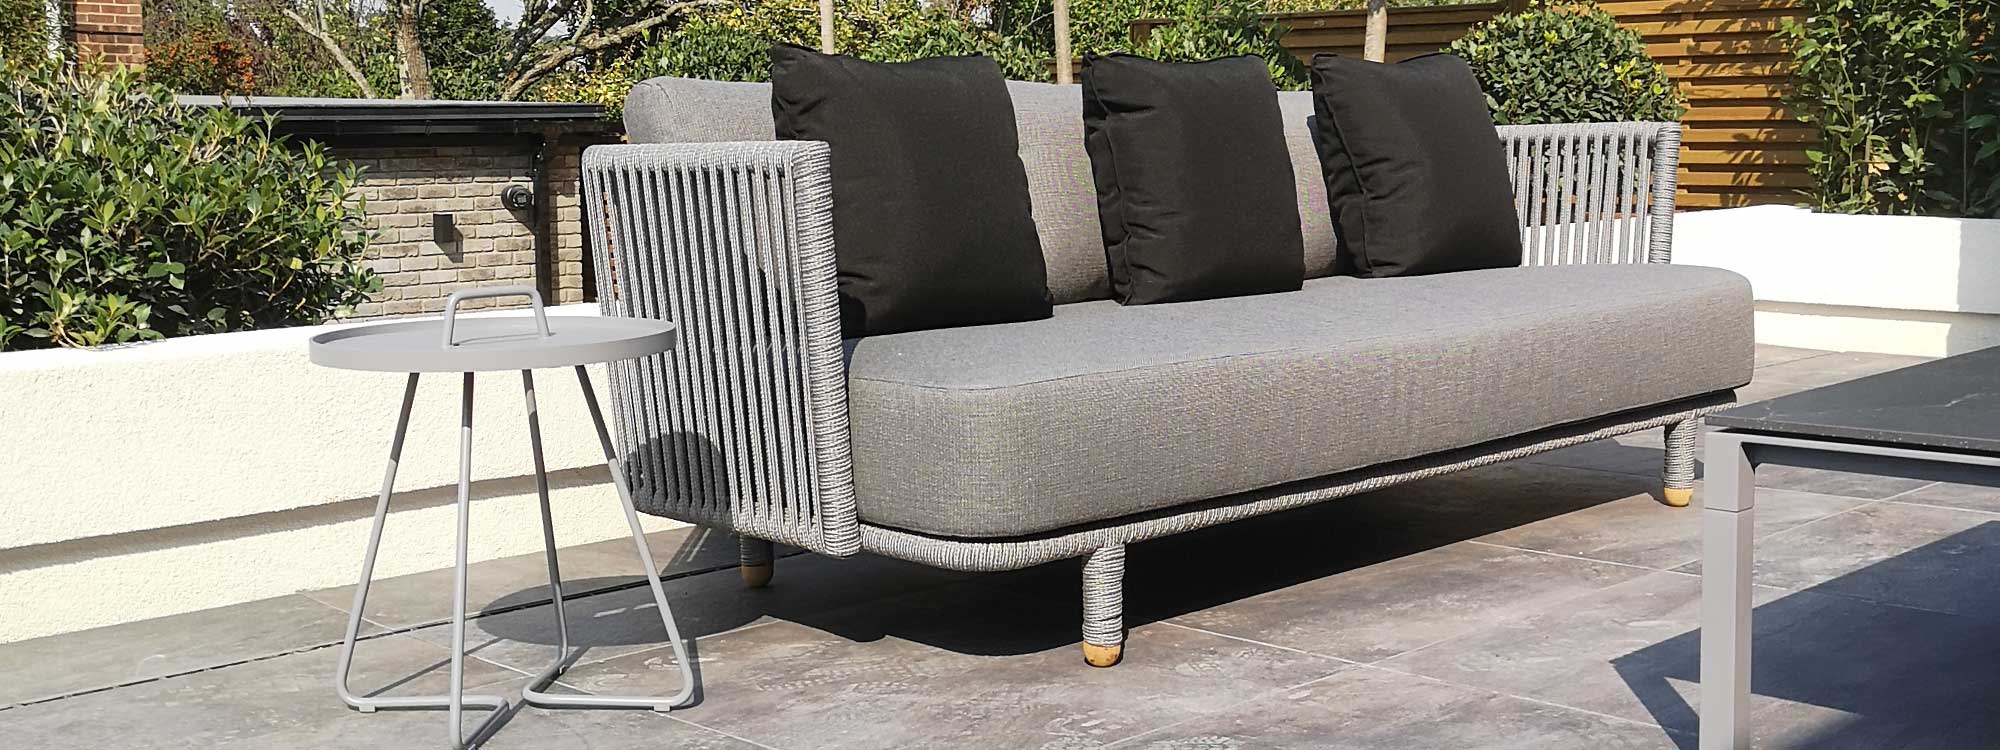 London Garden Furniture Installation Of Cane-line Moments Garden Sofa. Browse Our Modern GARDEN Sofa Sets – DESIGNER Outdoor CORNER Sofas & CONTEMPORARY Exterior LOUNGE Furniture In LUXURY Garden FURNITURE Materials